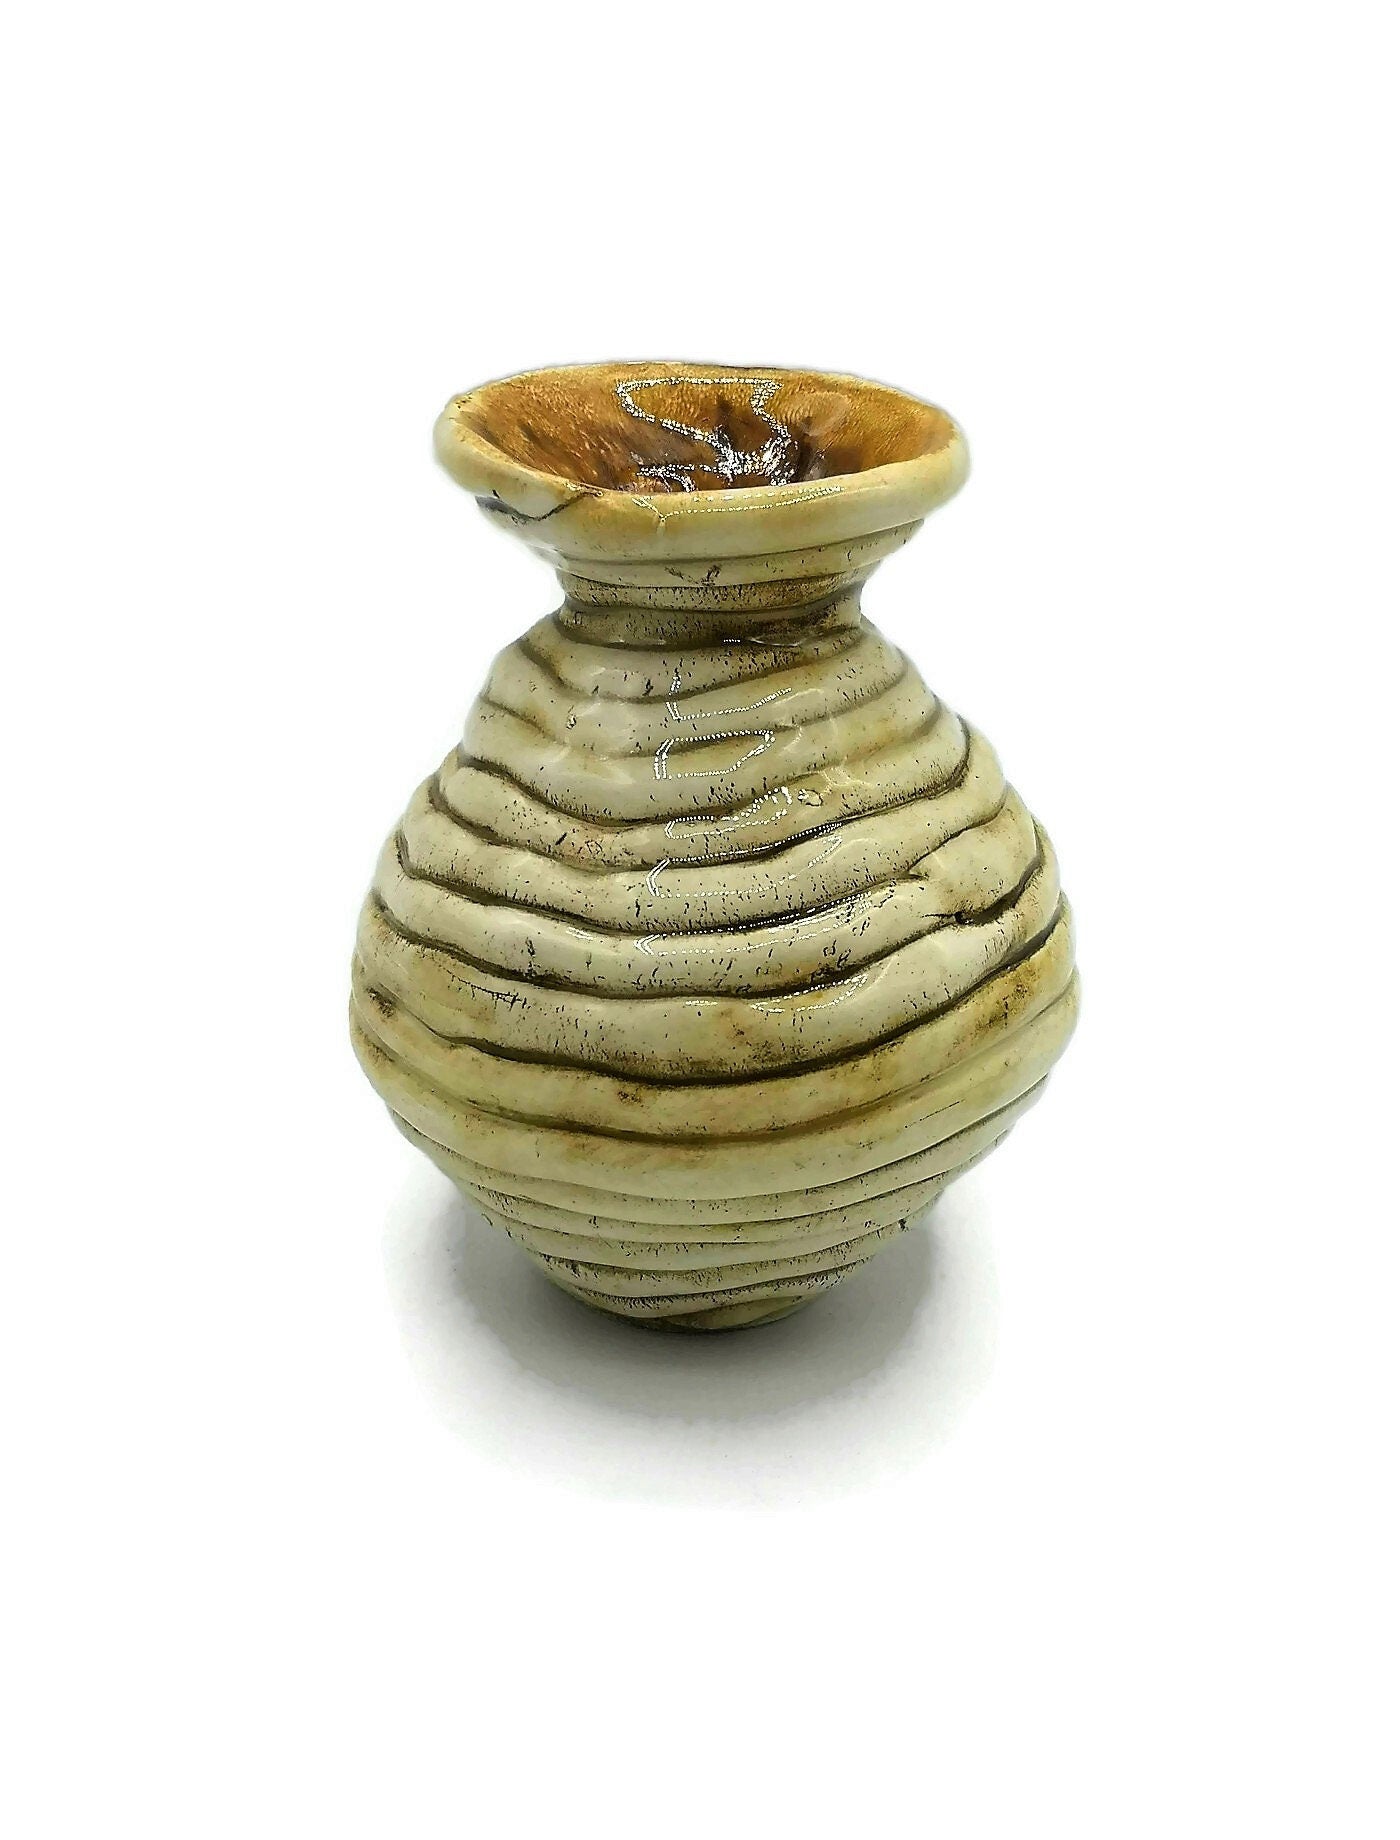 Handmade ceramic Vase, Textured Pottery Vase with Irregular Organic Shape, Abstract Sculpture Ceramic Vessel, Home Decor Gift Idea - Ceramica Ana Rafael